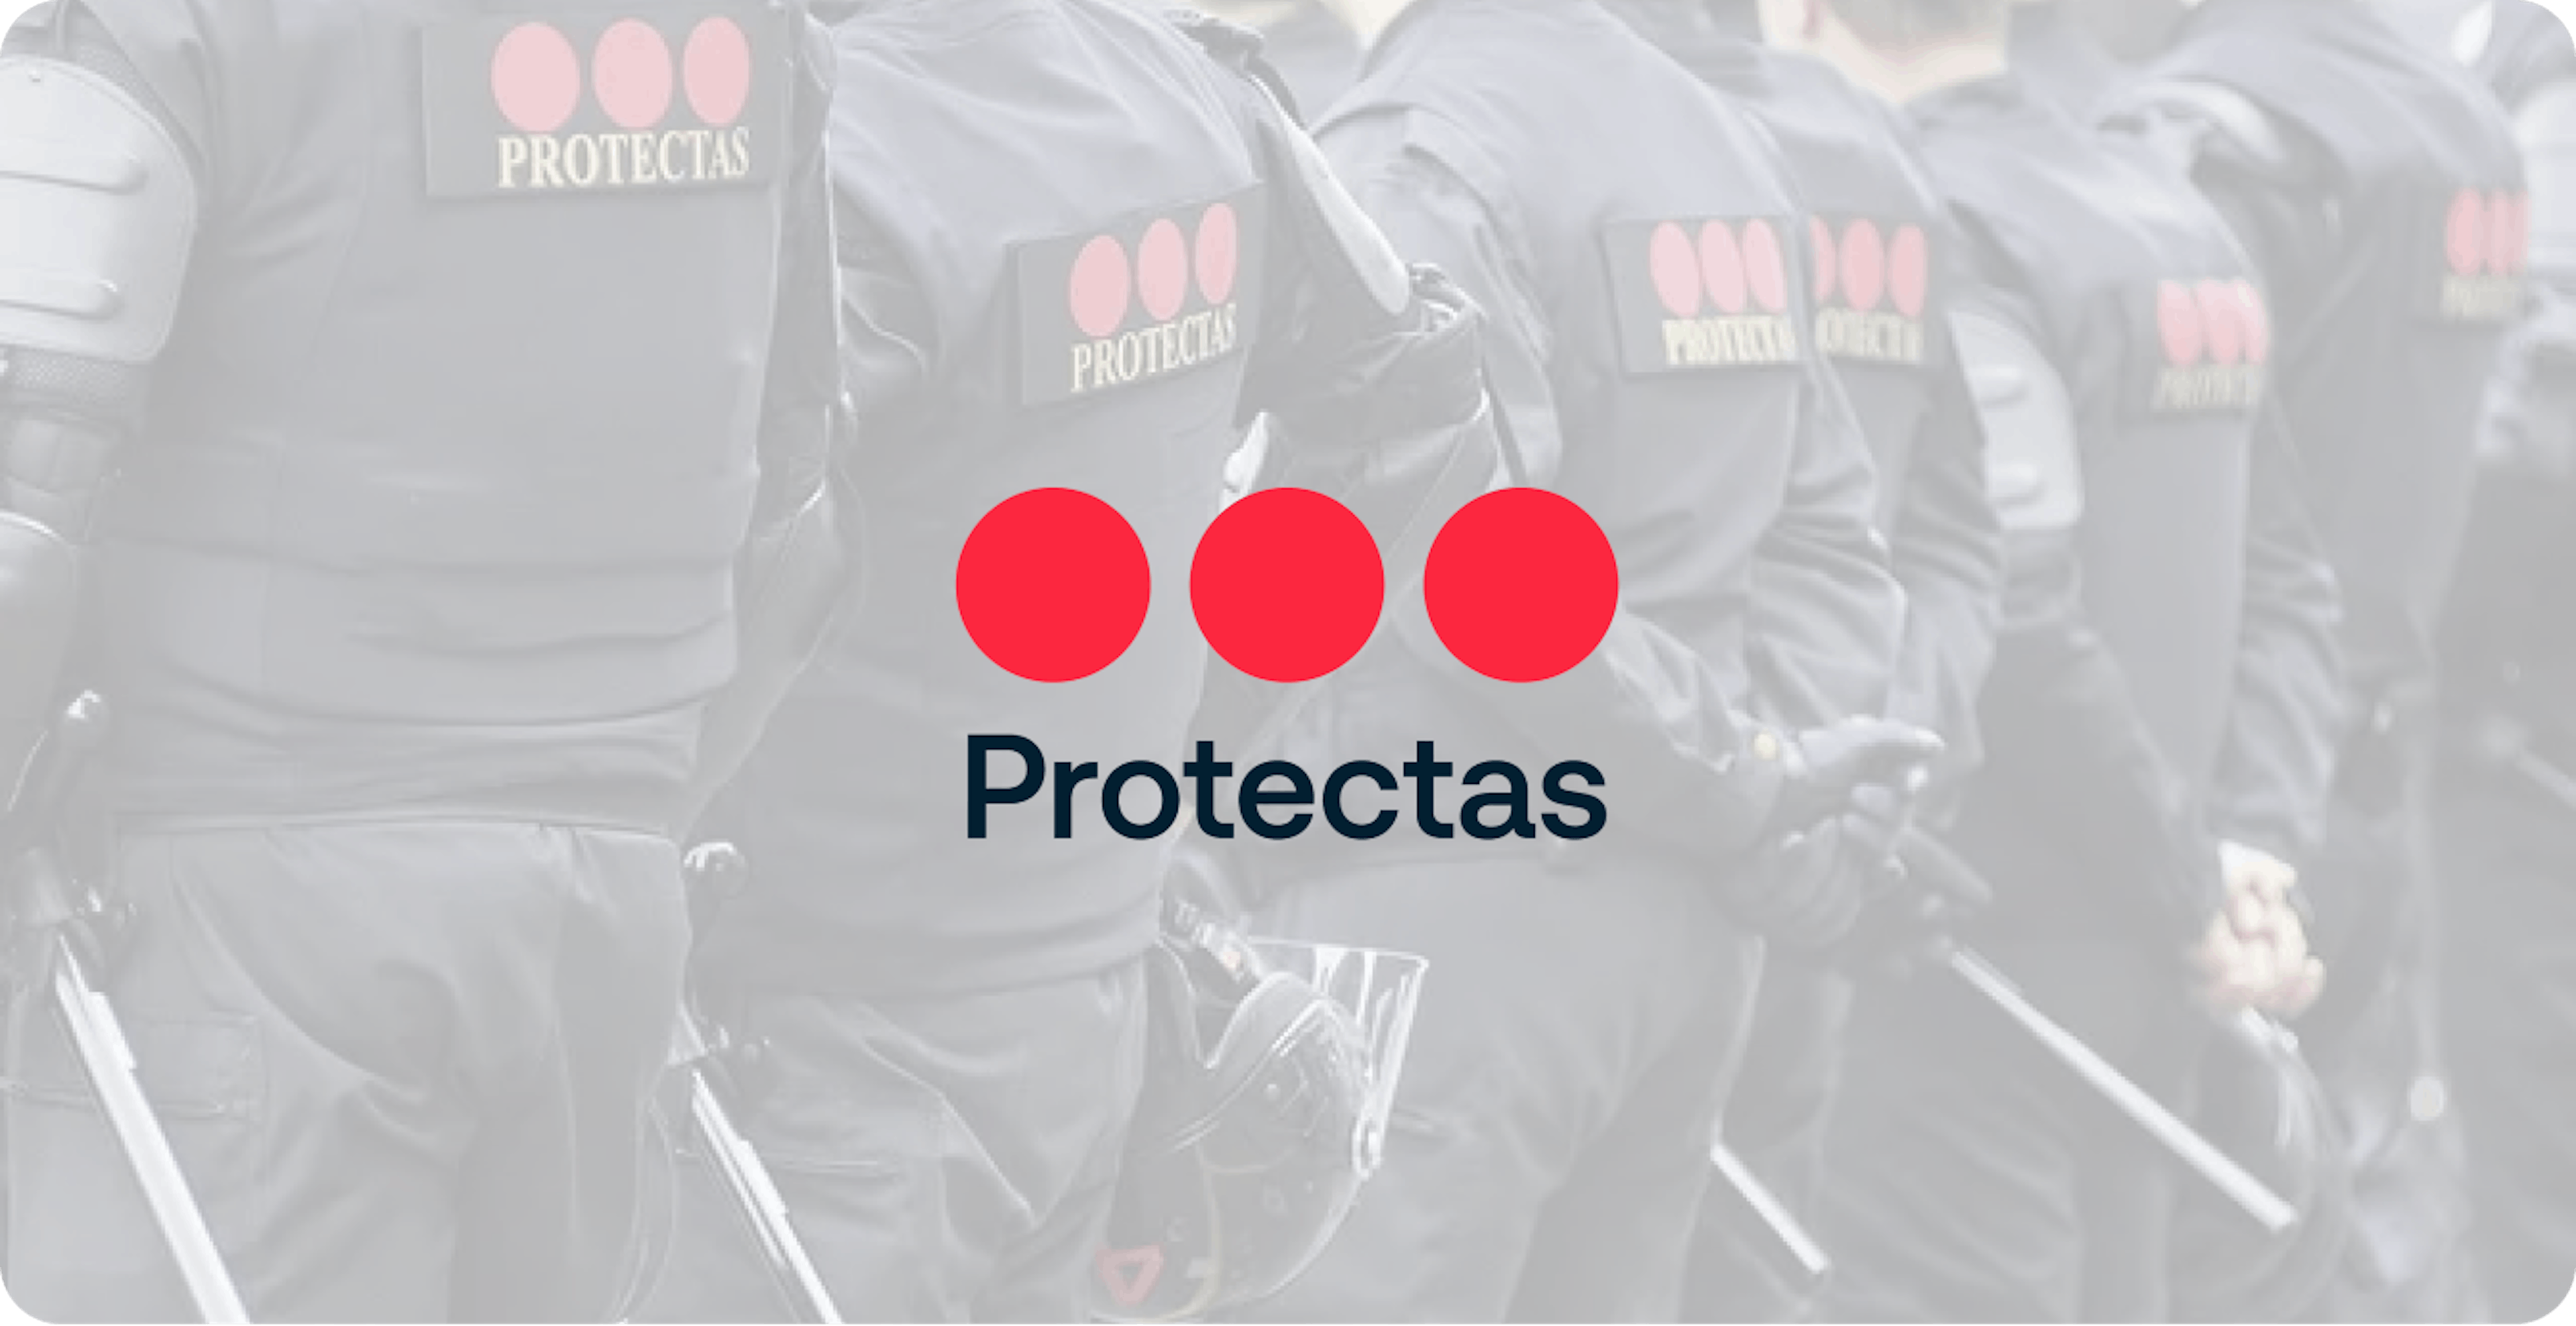 Protectas_evalink marketplace